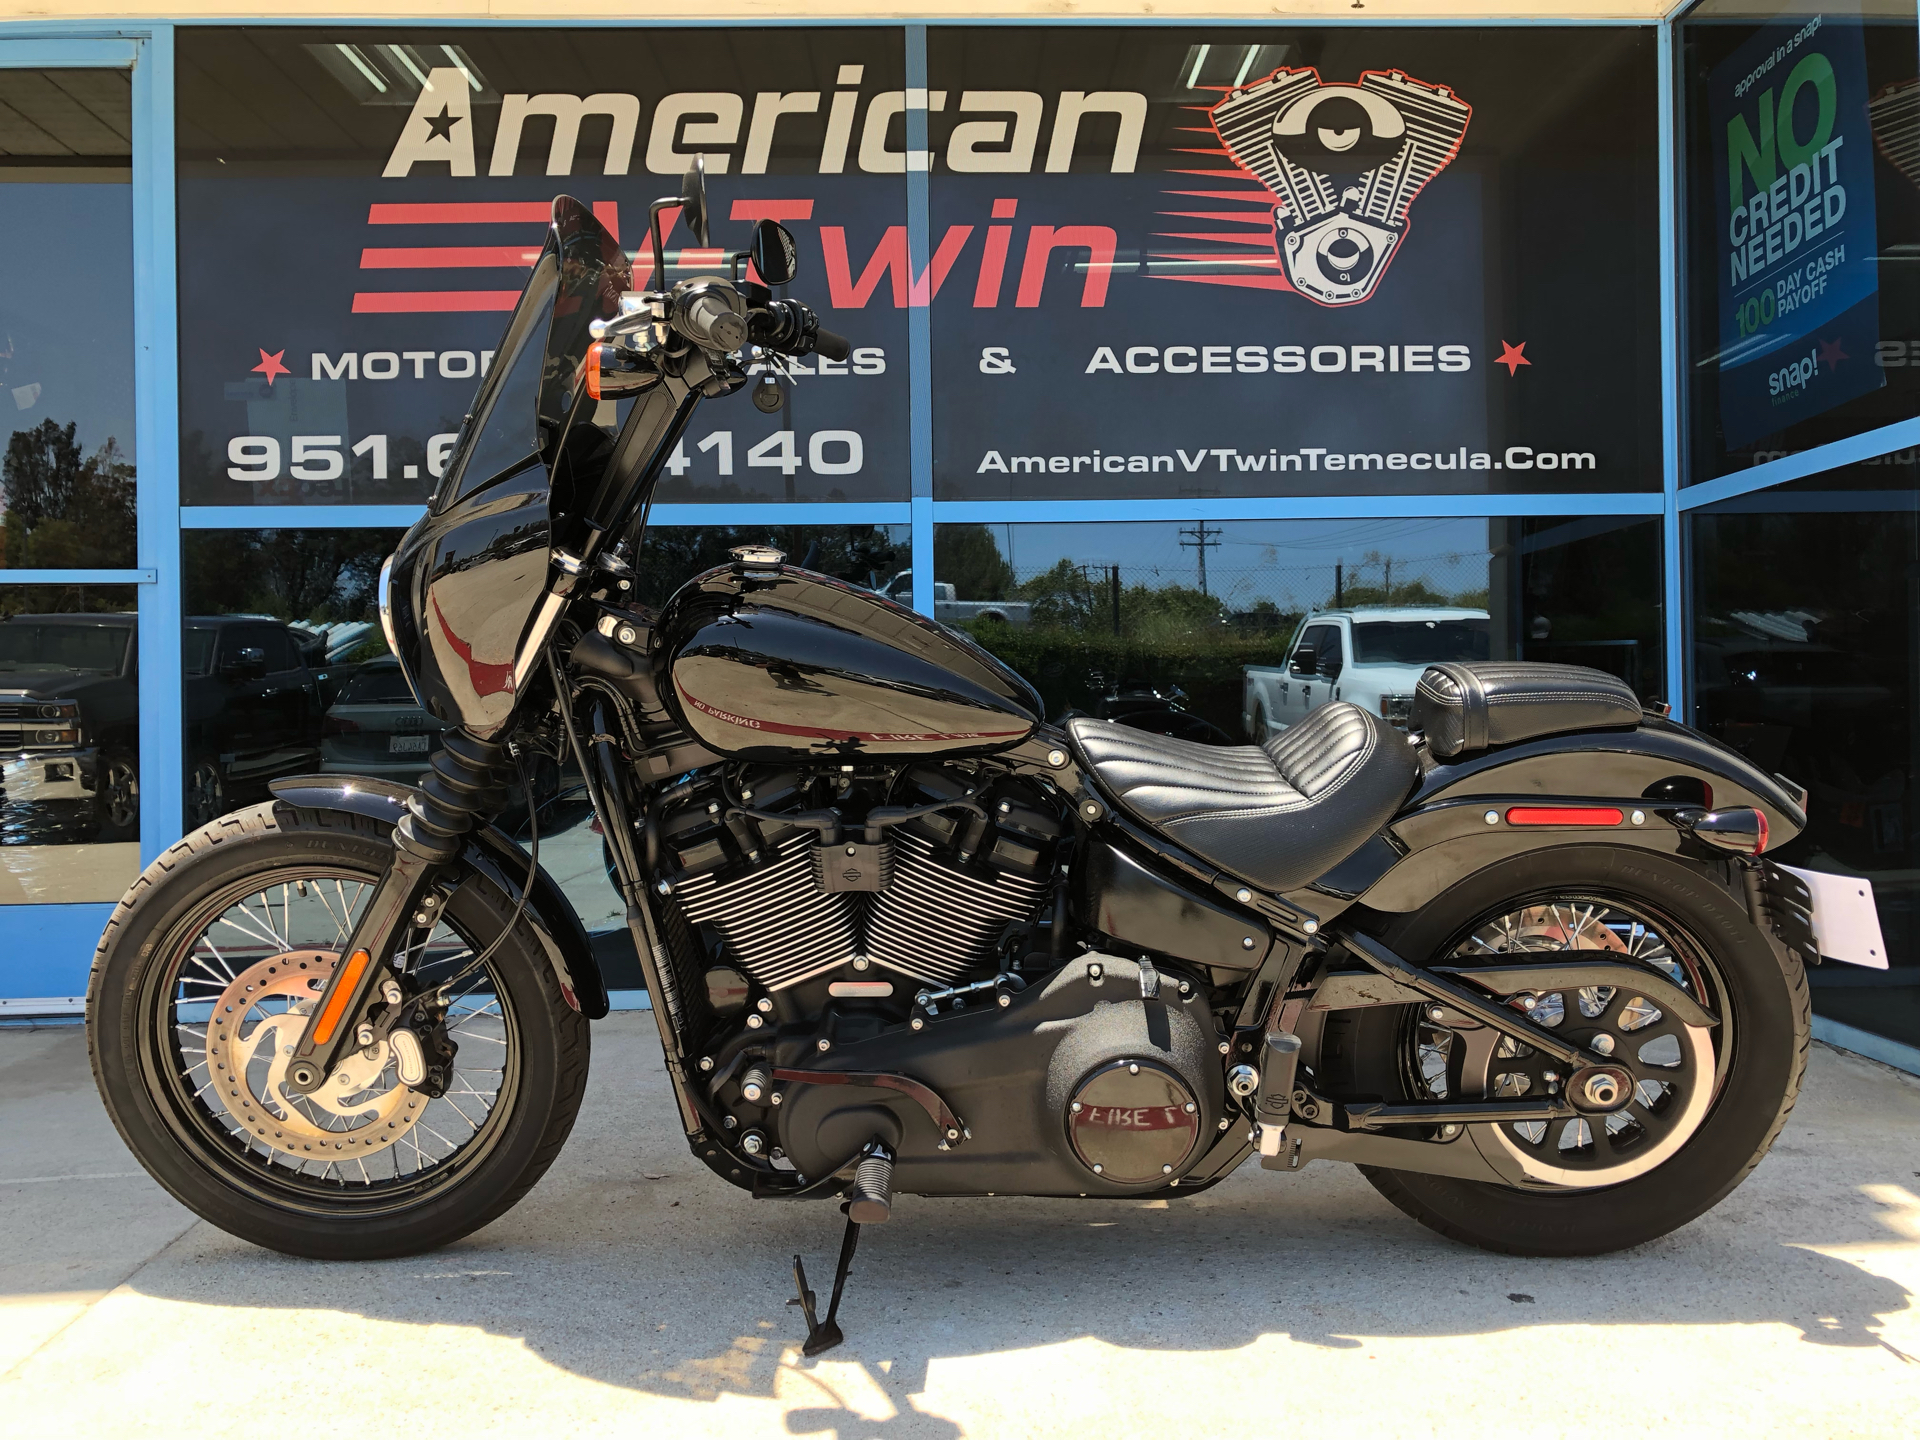 2021 Harley-Davidson Street Bob® 114 in Temecula, California - Photo 14